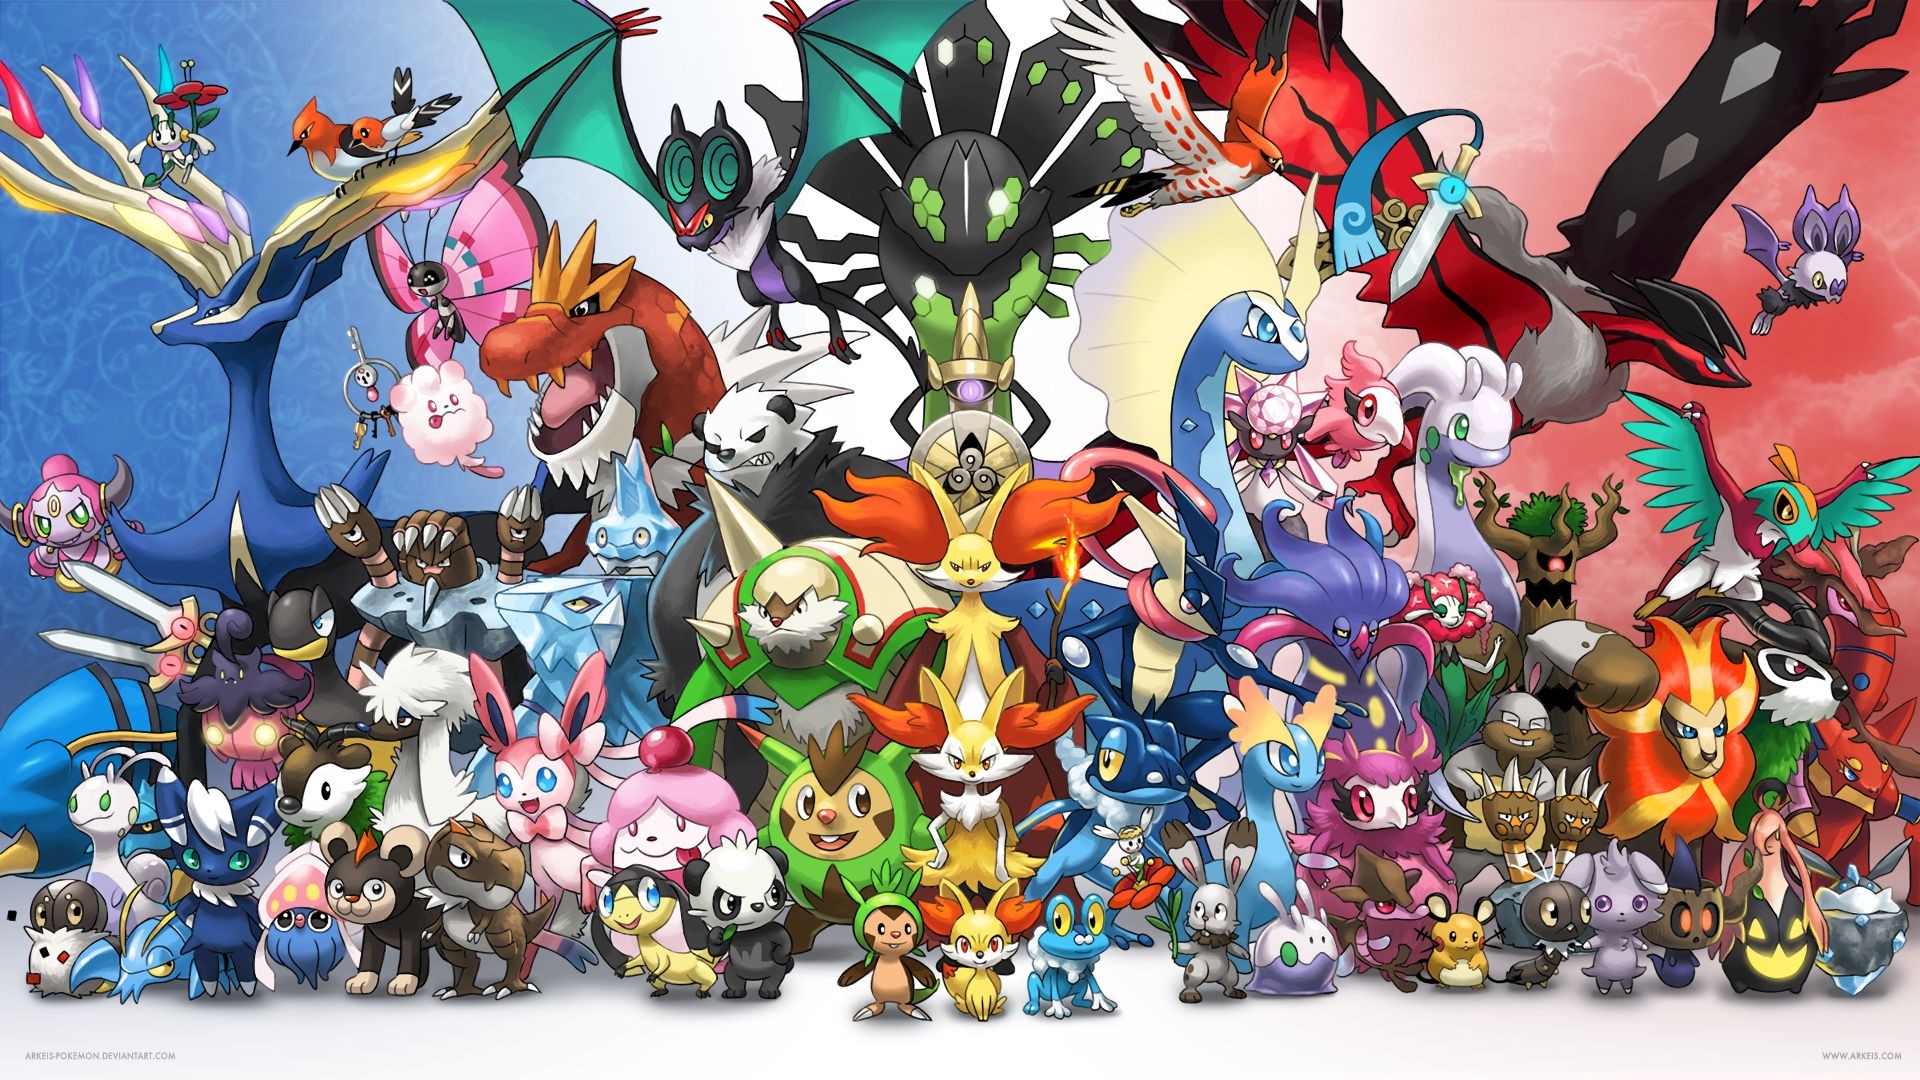 rayquaza - Google Search  Pokemon rayquaza, Rayquaza wallpaper, Cool  pokemon wallpapers